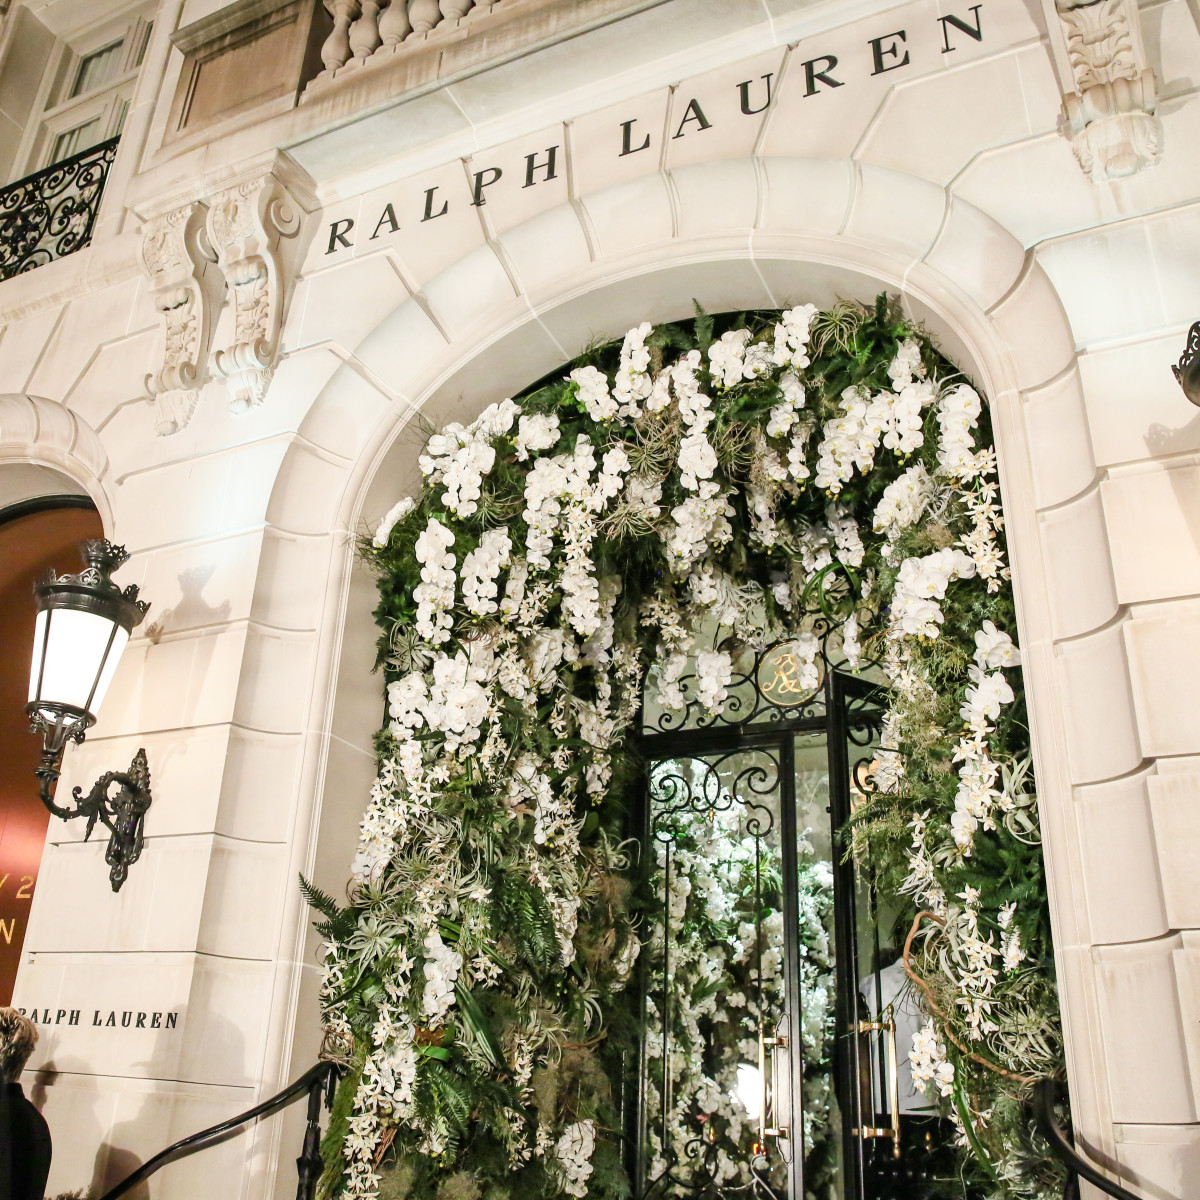 Ralph Lauren's secret garden is fashion week's most spectacular show ...